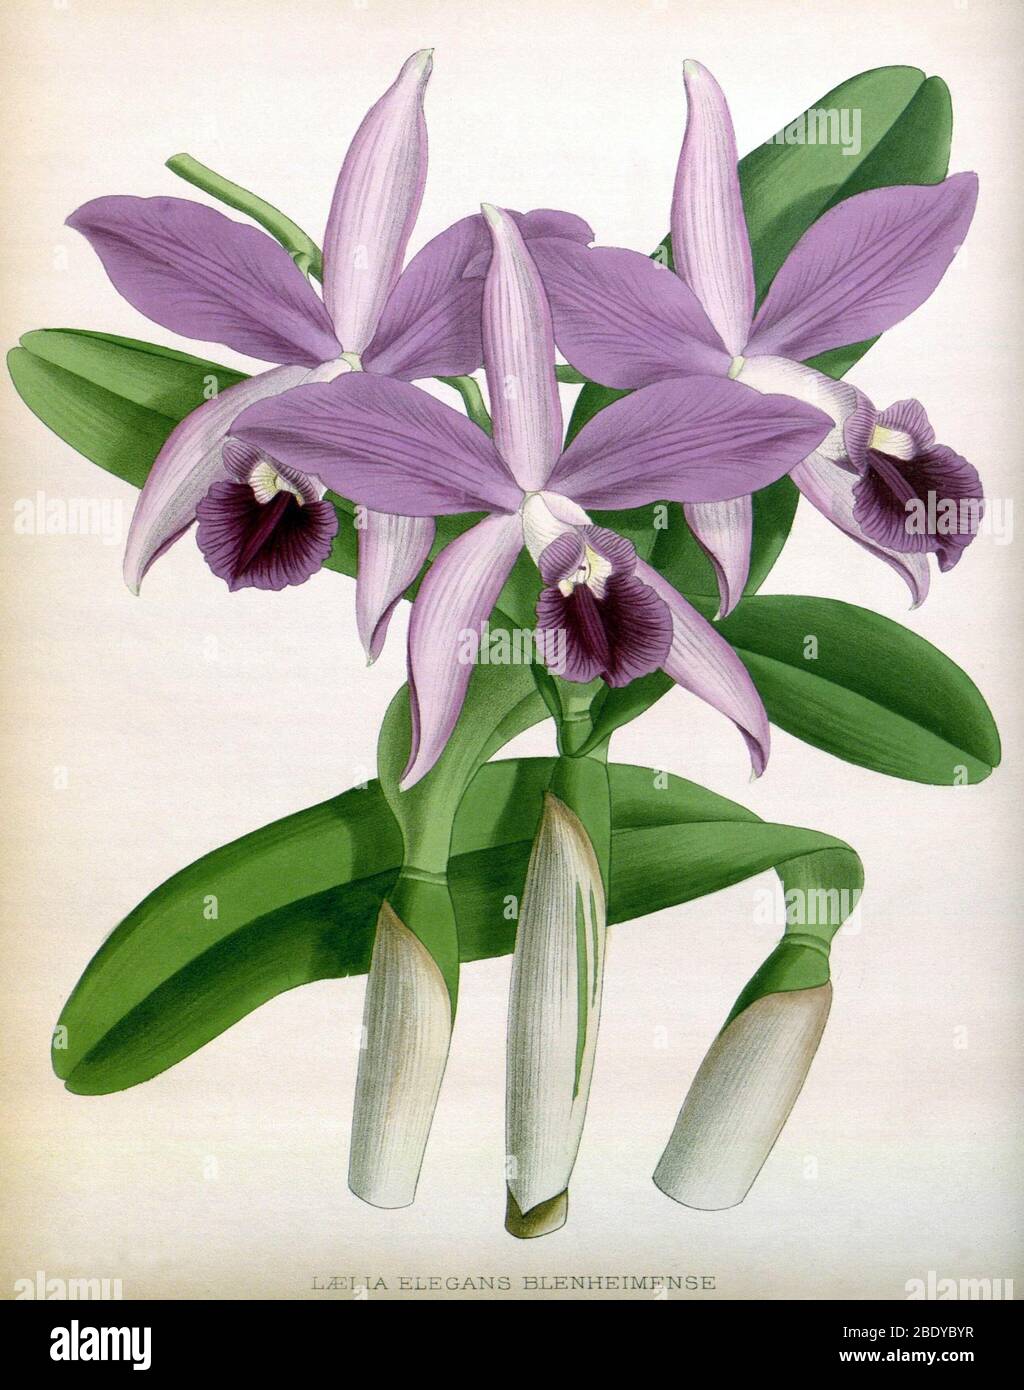 Orchid, Laelia elegans blenheimense, 1891 Foto Stock